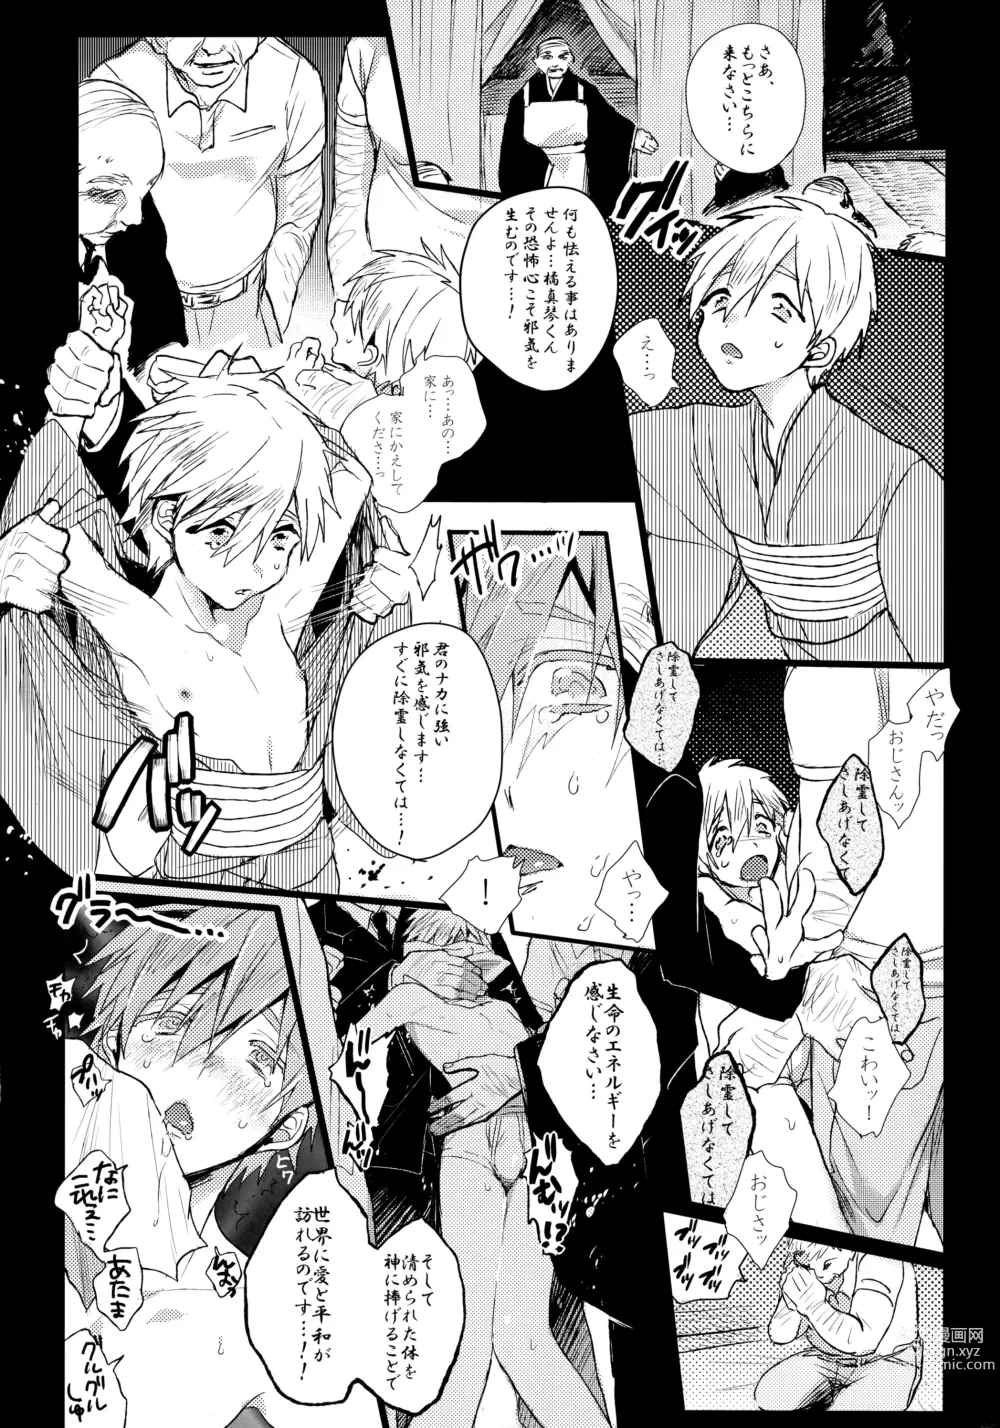 Page 6 of doujinshi Memento mori